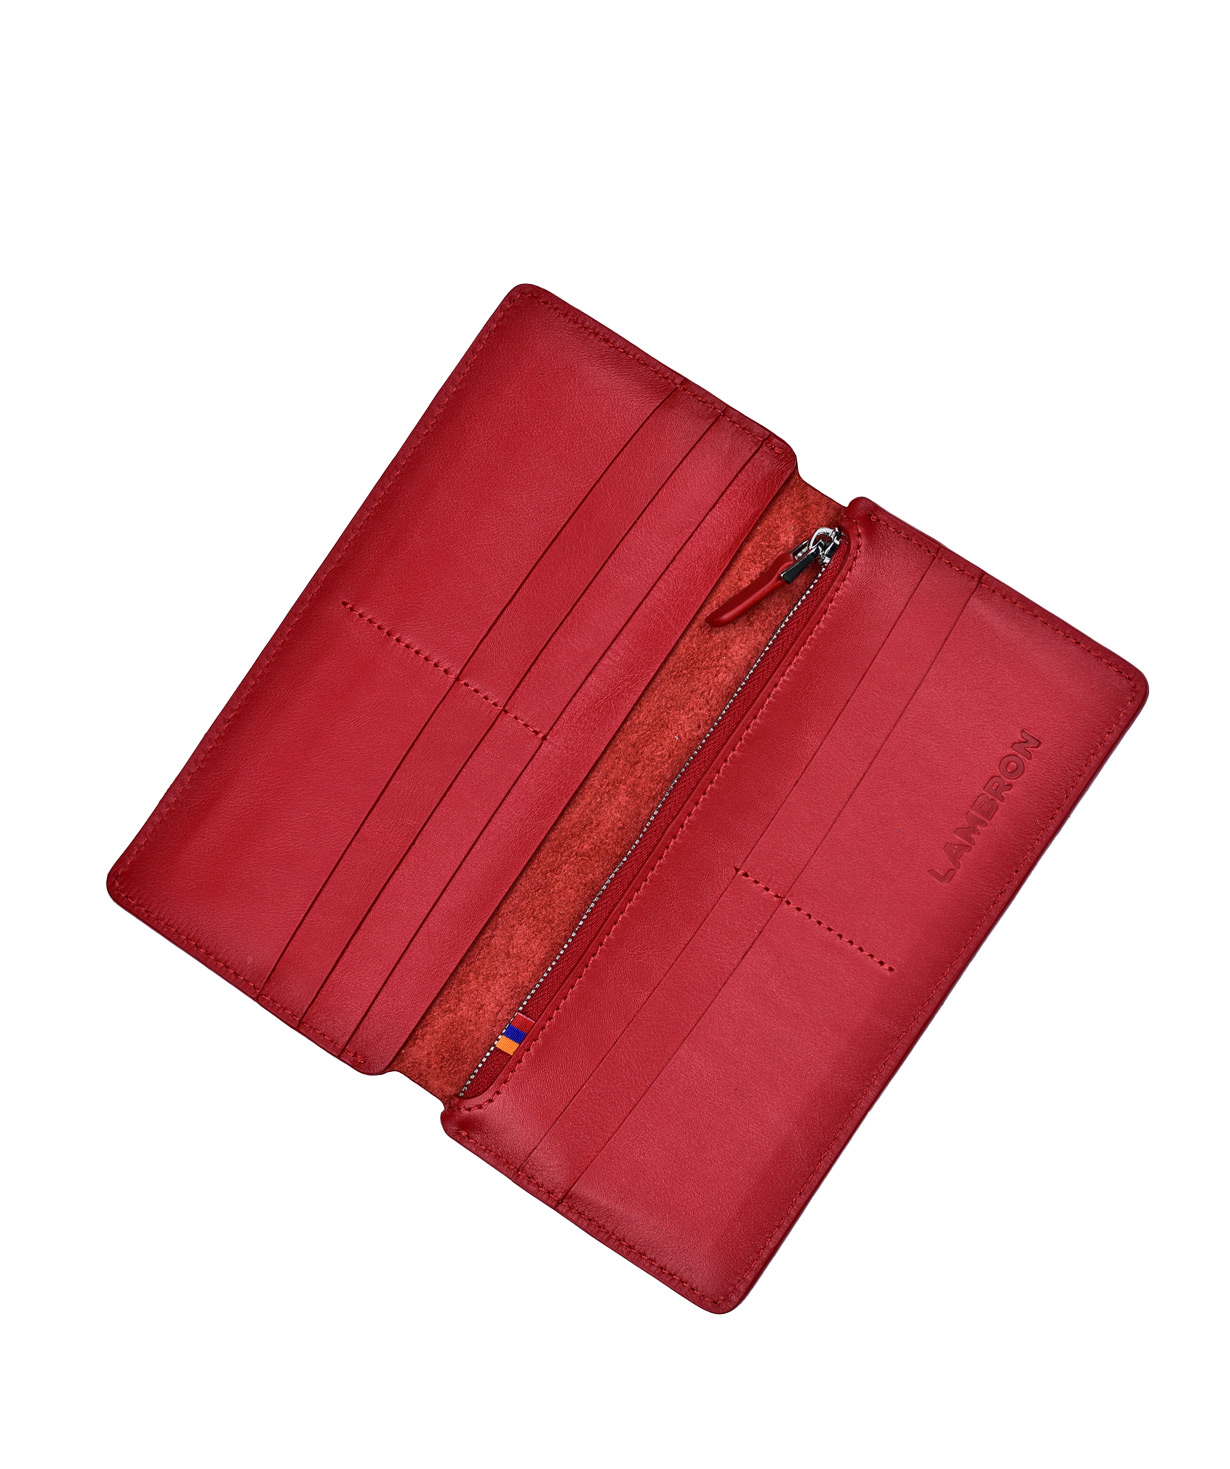 Wallet «Lambron» Santa Claus (red) travel